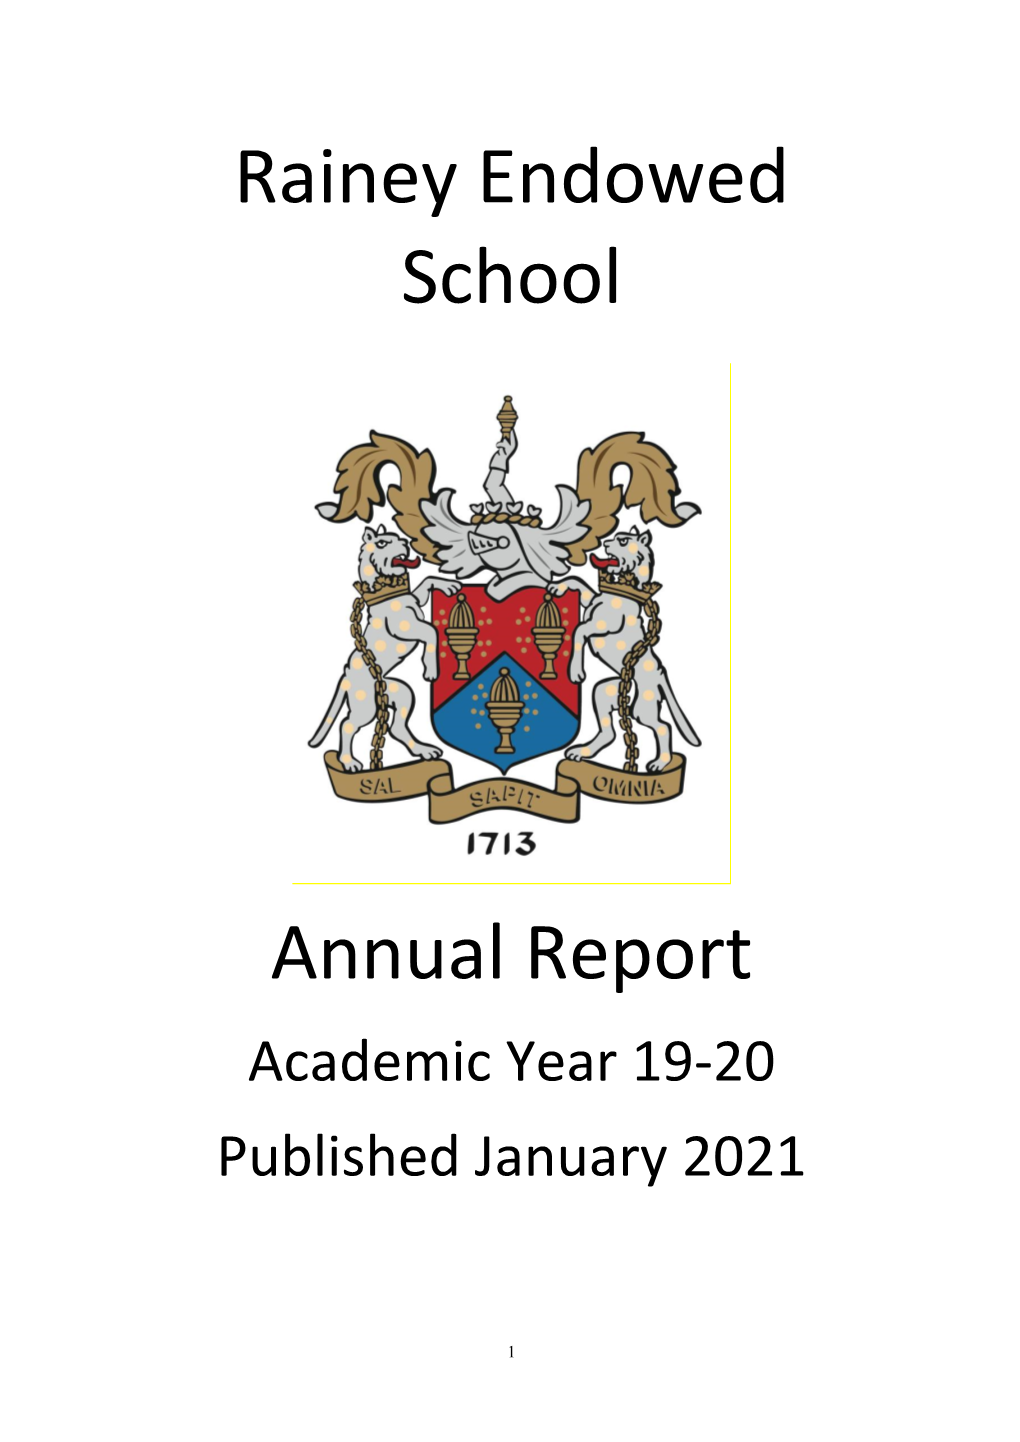 Rainey Endowed School Annual Report